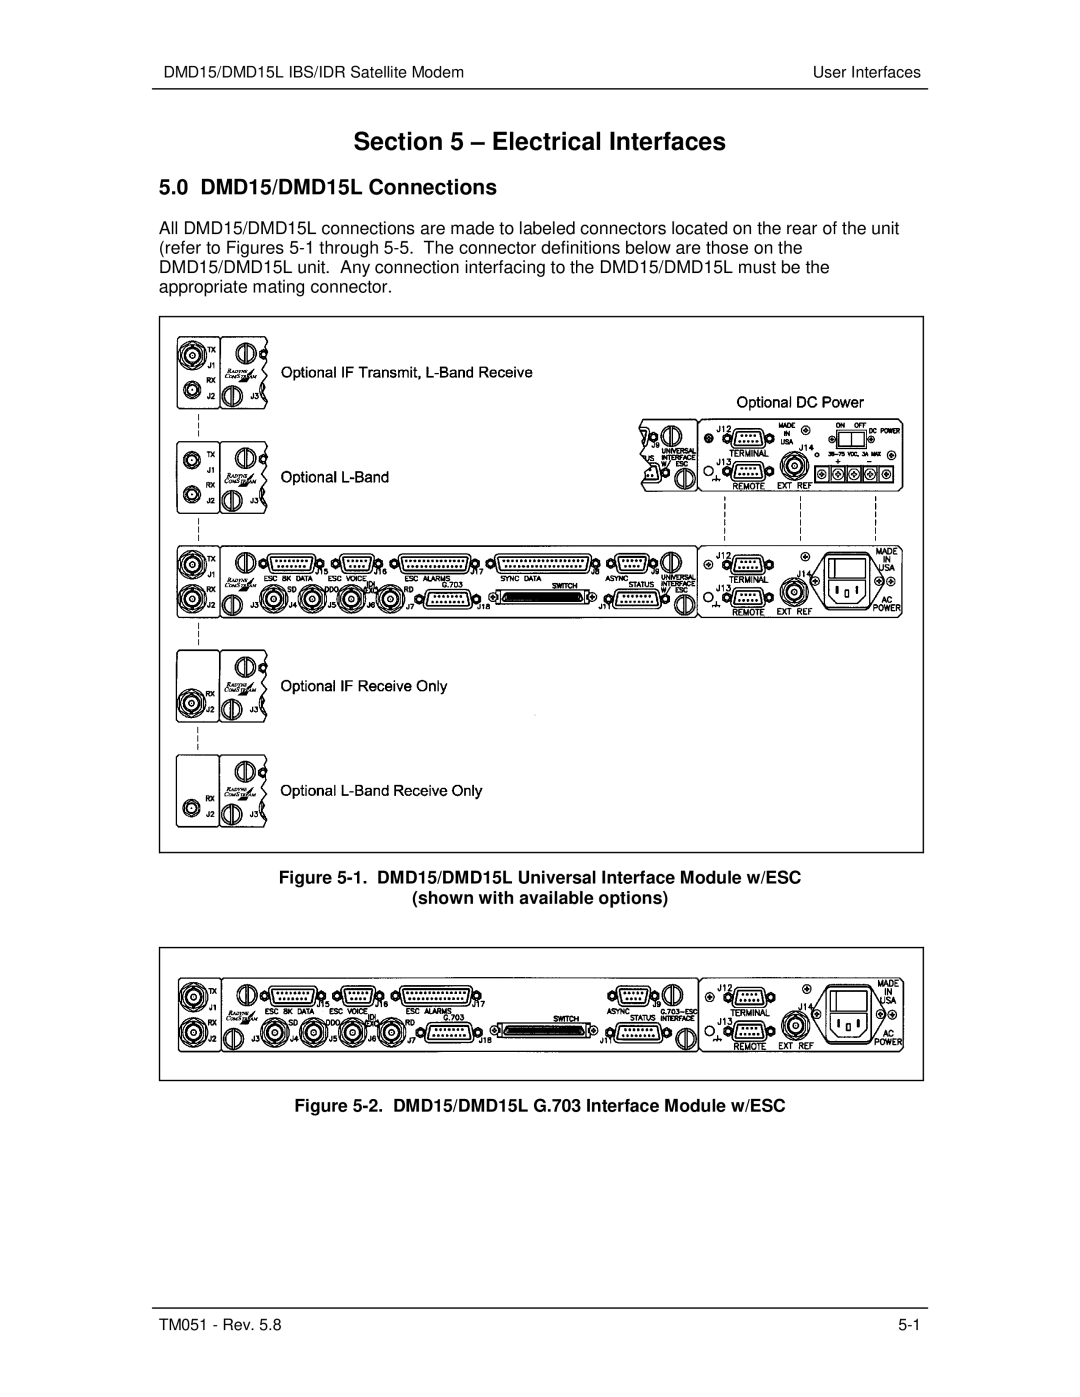 Paradyne operation manual DMD15/DMD15L Connections, DMD15/DMD15L G.703 Interface Module w/ESC 